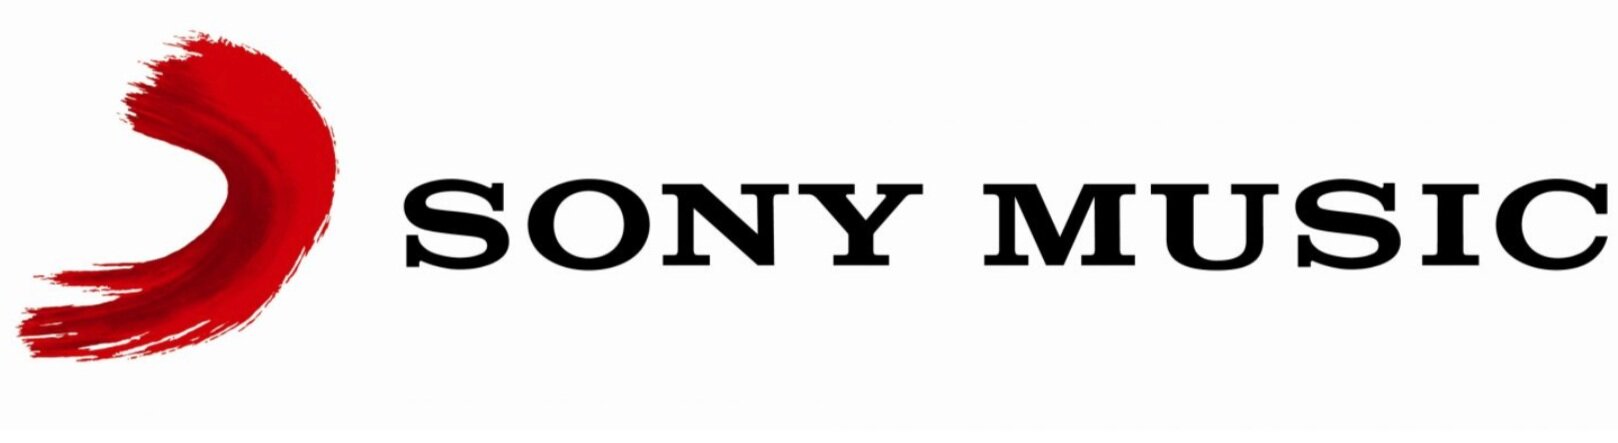 sony+music+logo.jpg